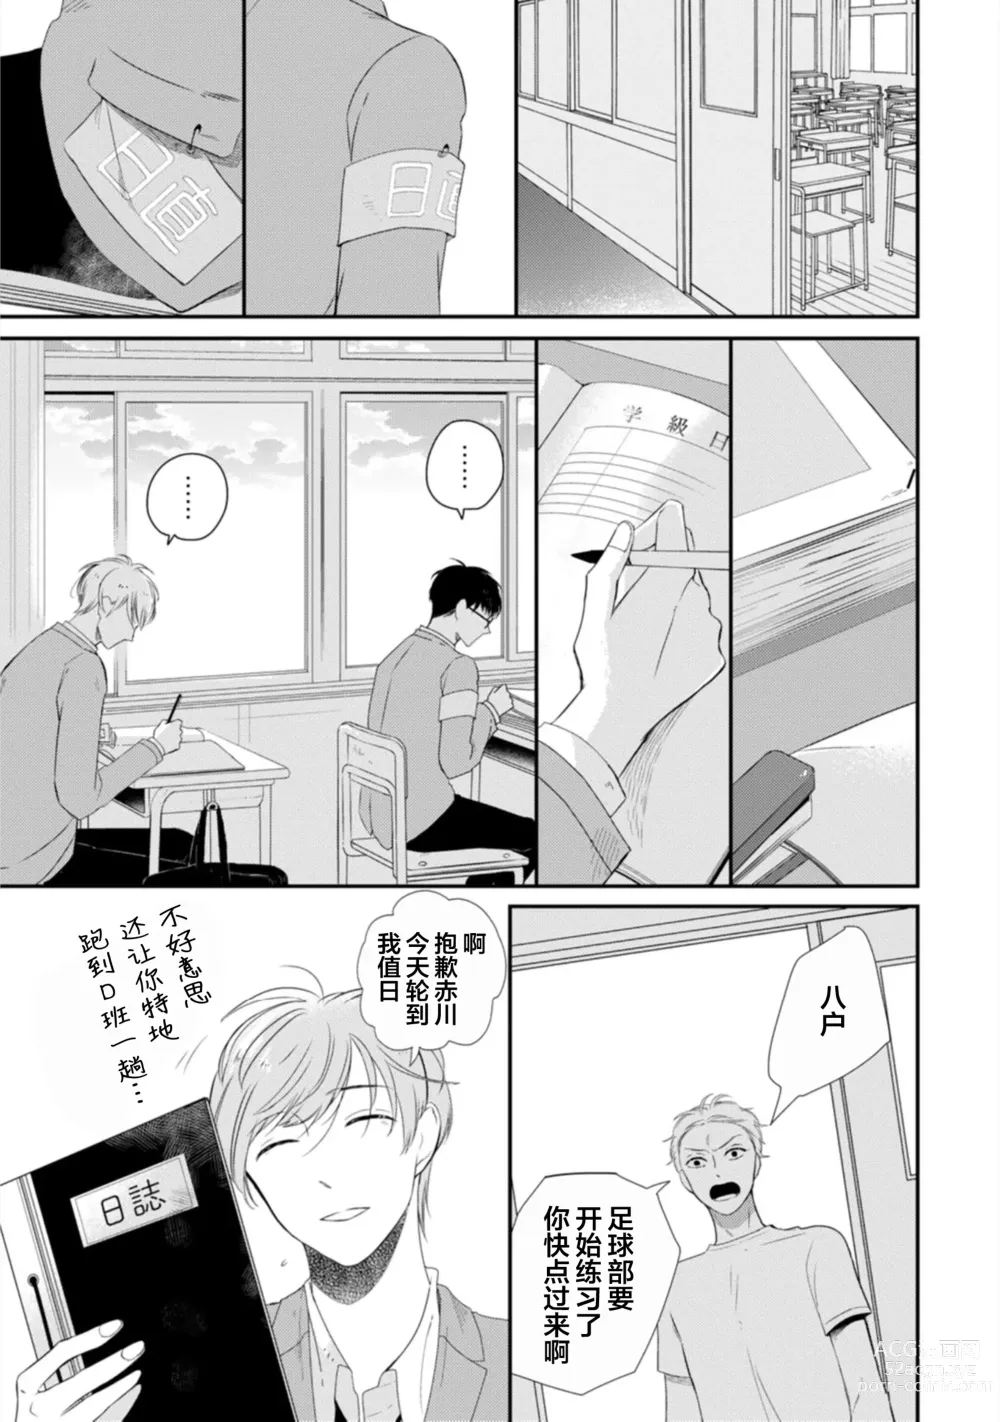 Page 9 of manga 渴望褪下制服